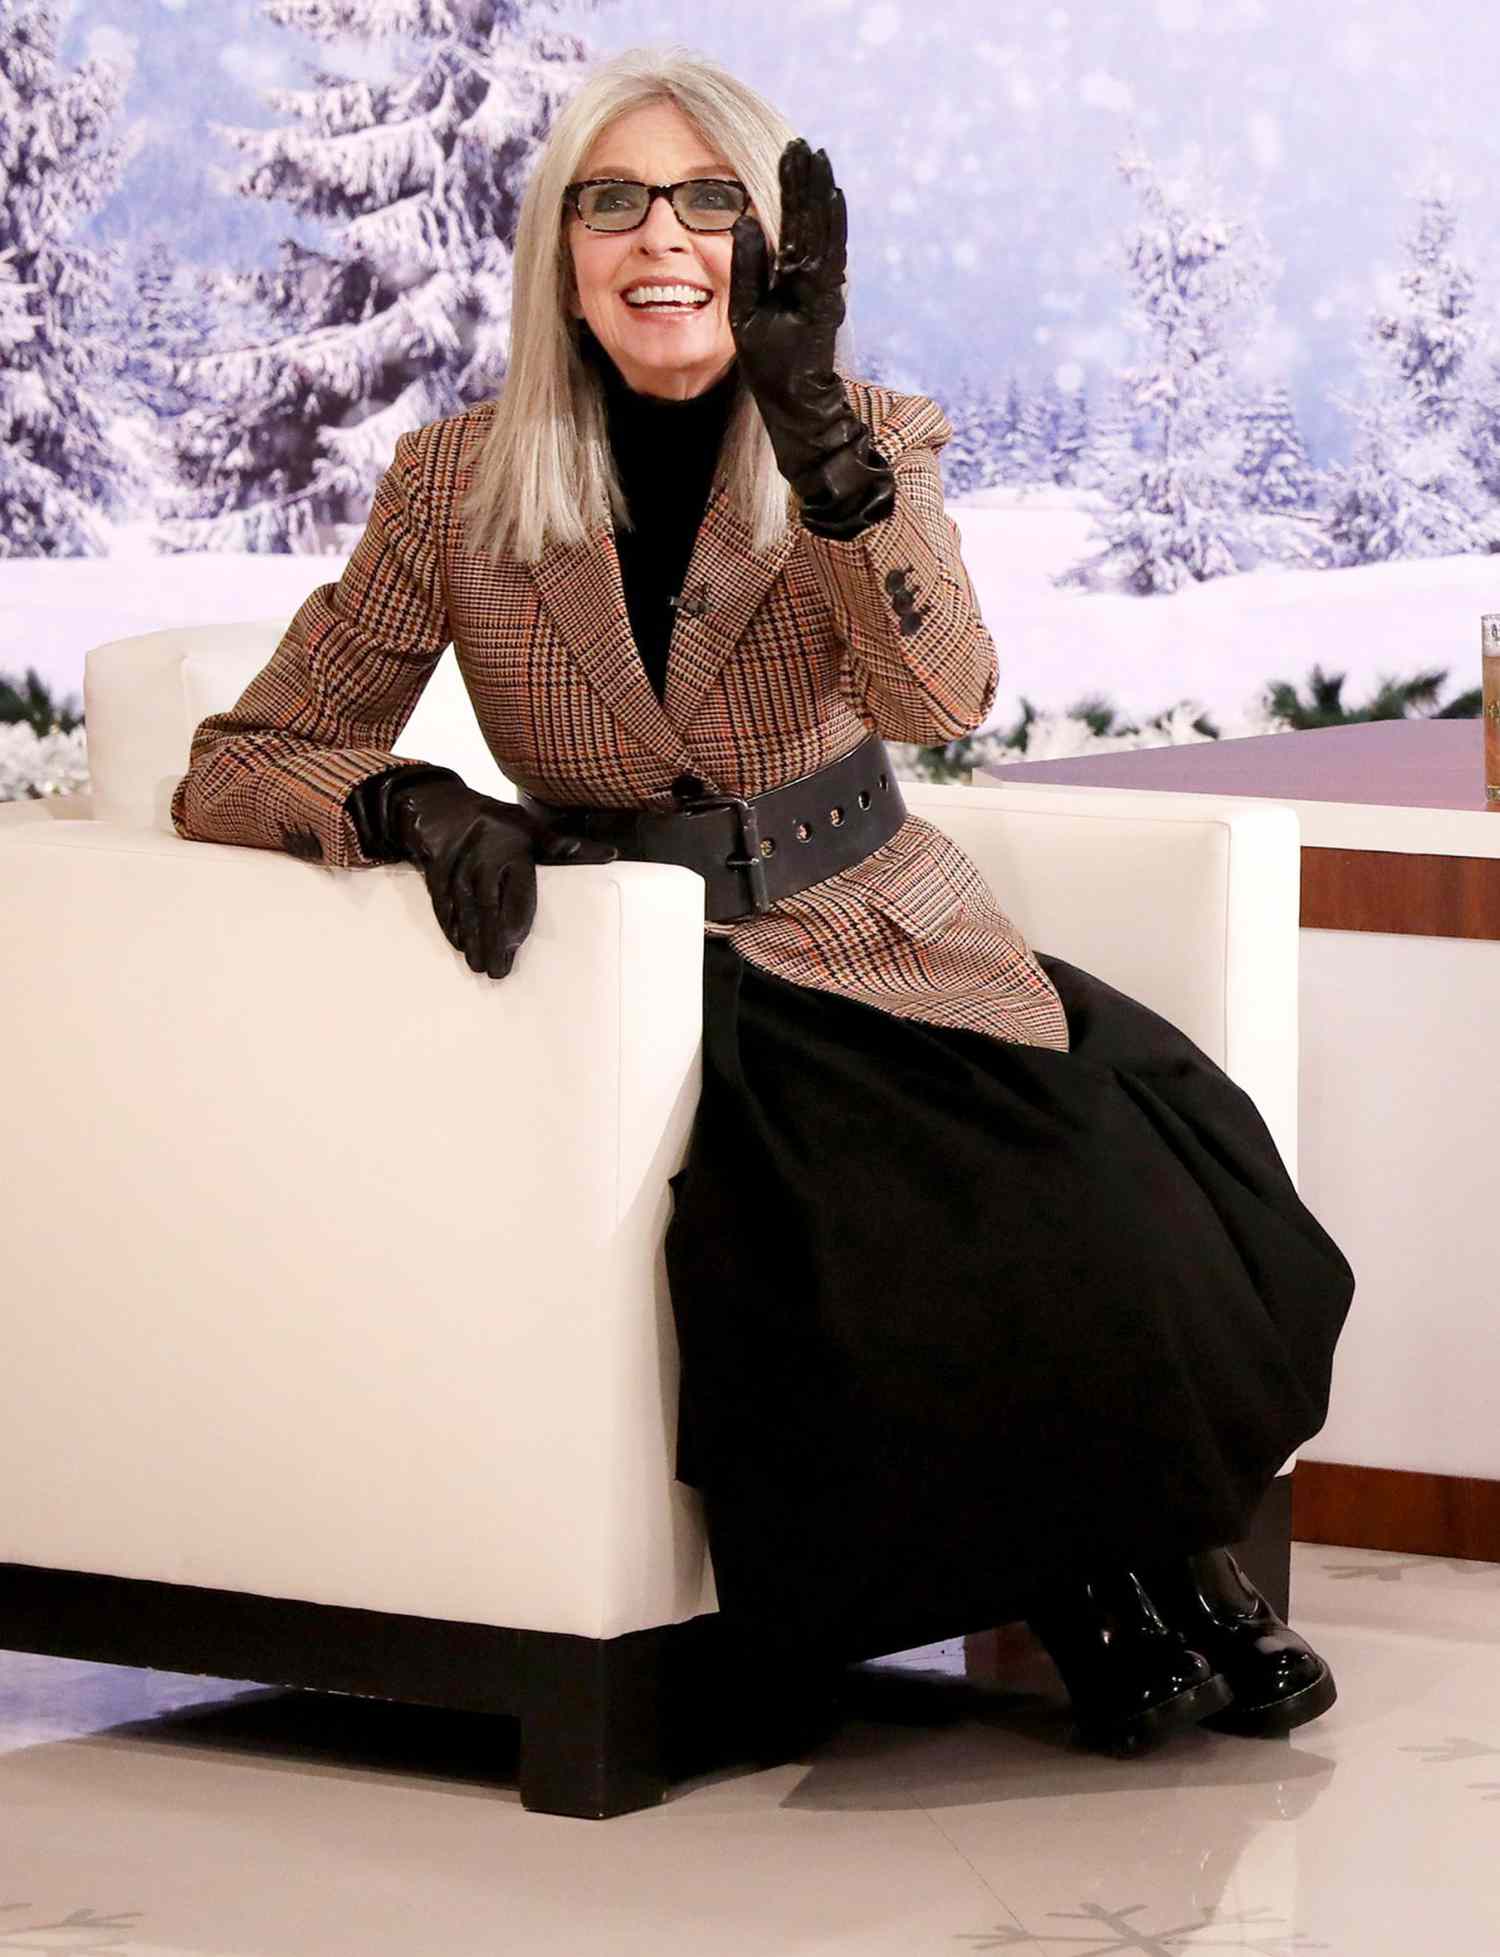 Diane Keaton on &ldquo;The Ellen DeGeneres Show,&rdquo; airing Thursday, December 3rd